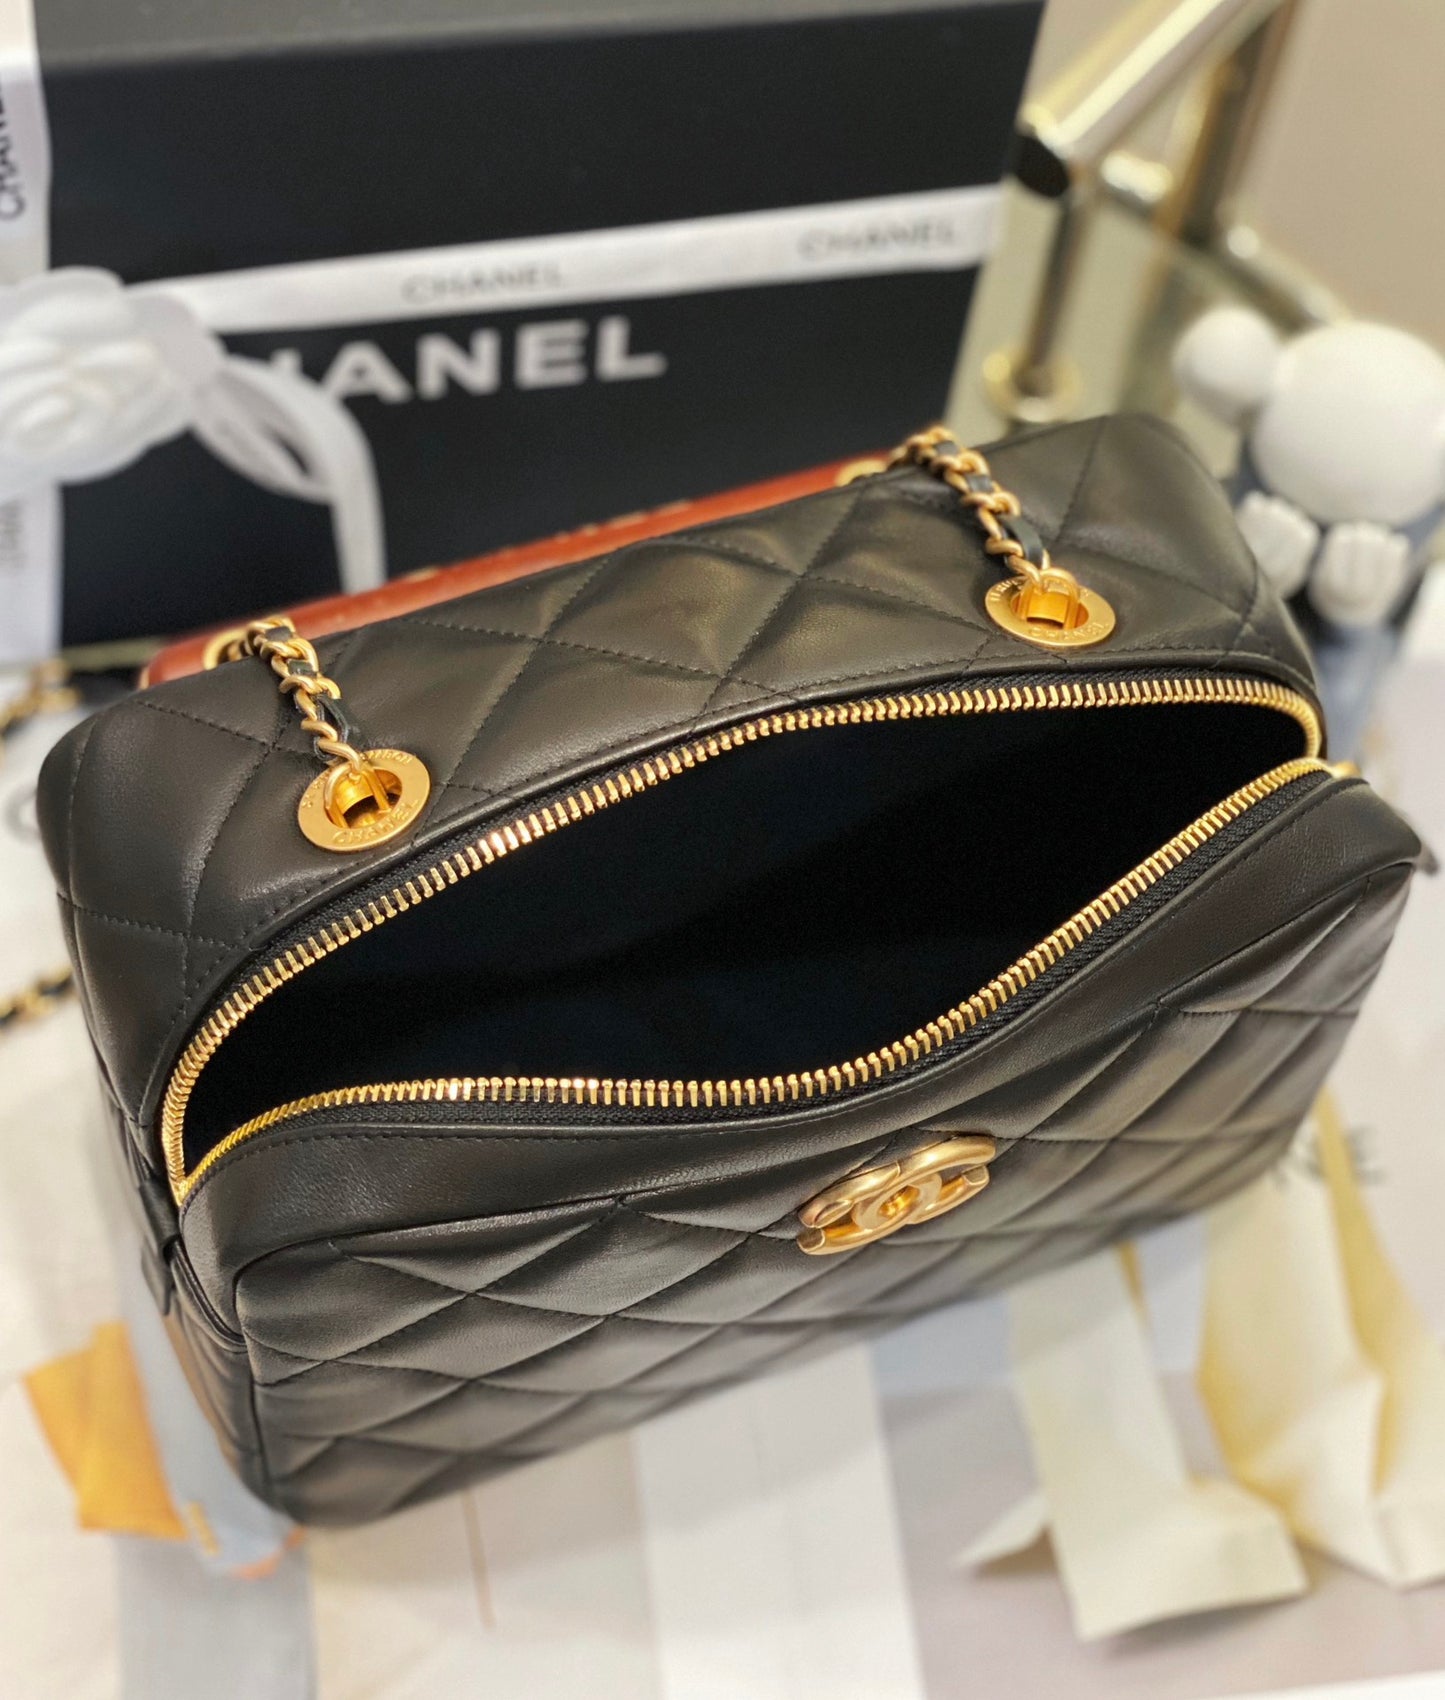 Chanel 23 Chain Bag